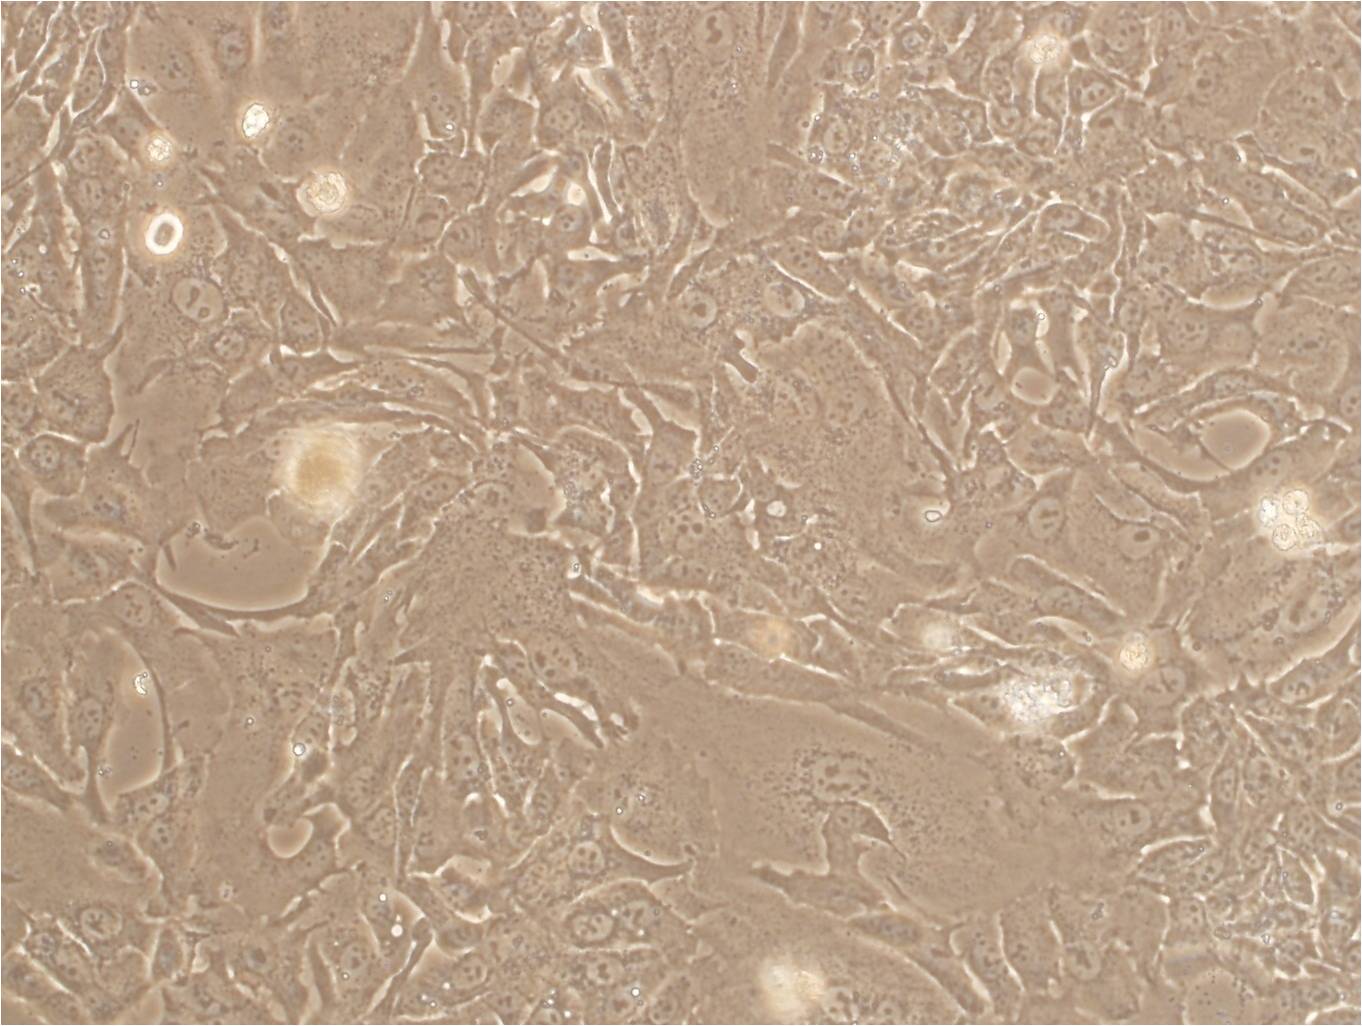 MCF-7 Cells|人乳腺癌克隆细胞(包送STR鉴定报告)前列腺癌克隆细胞(包送STR鉴定报告),MCF-7 Cells